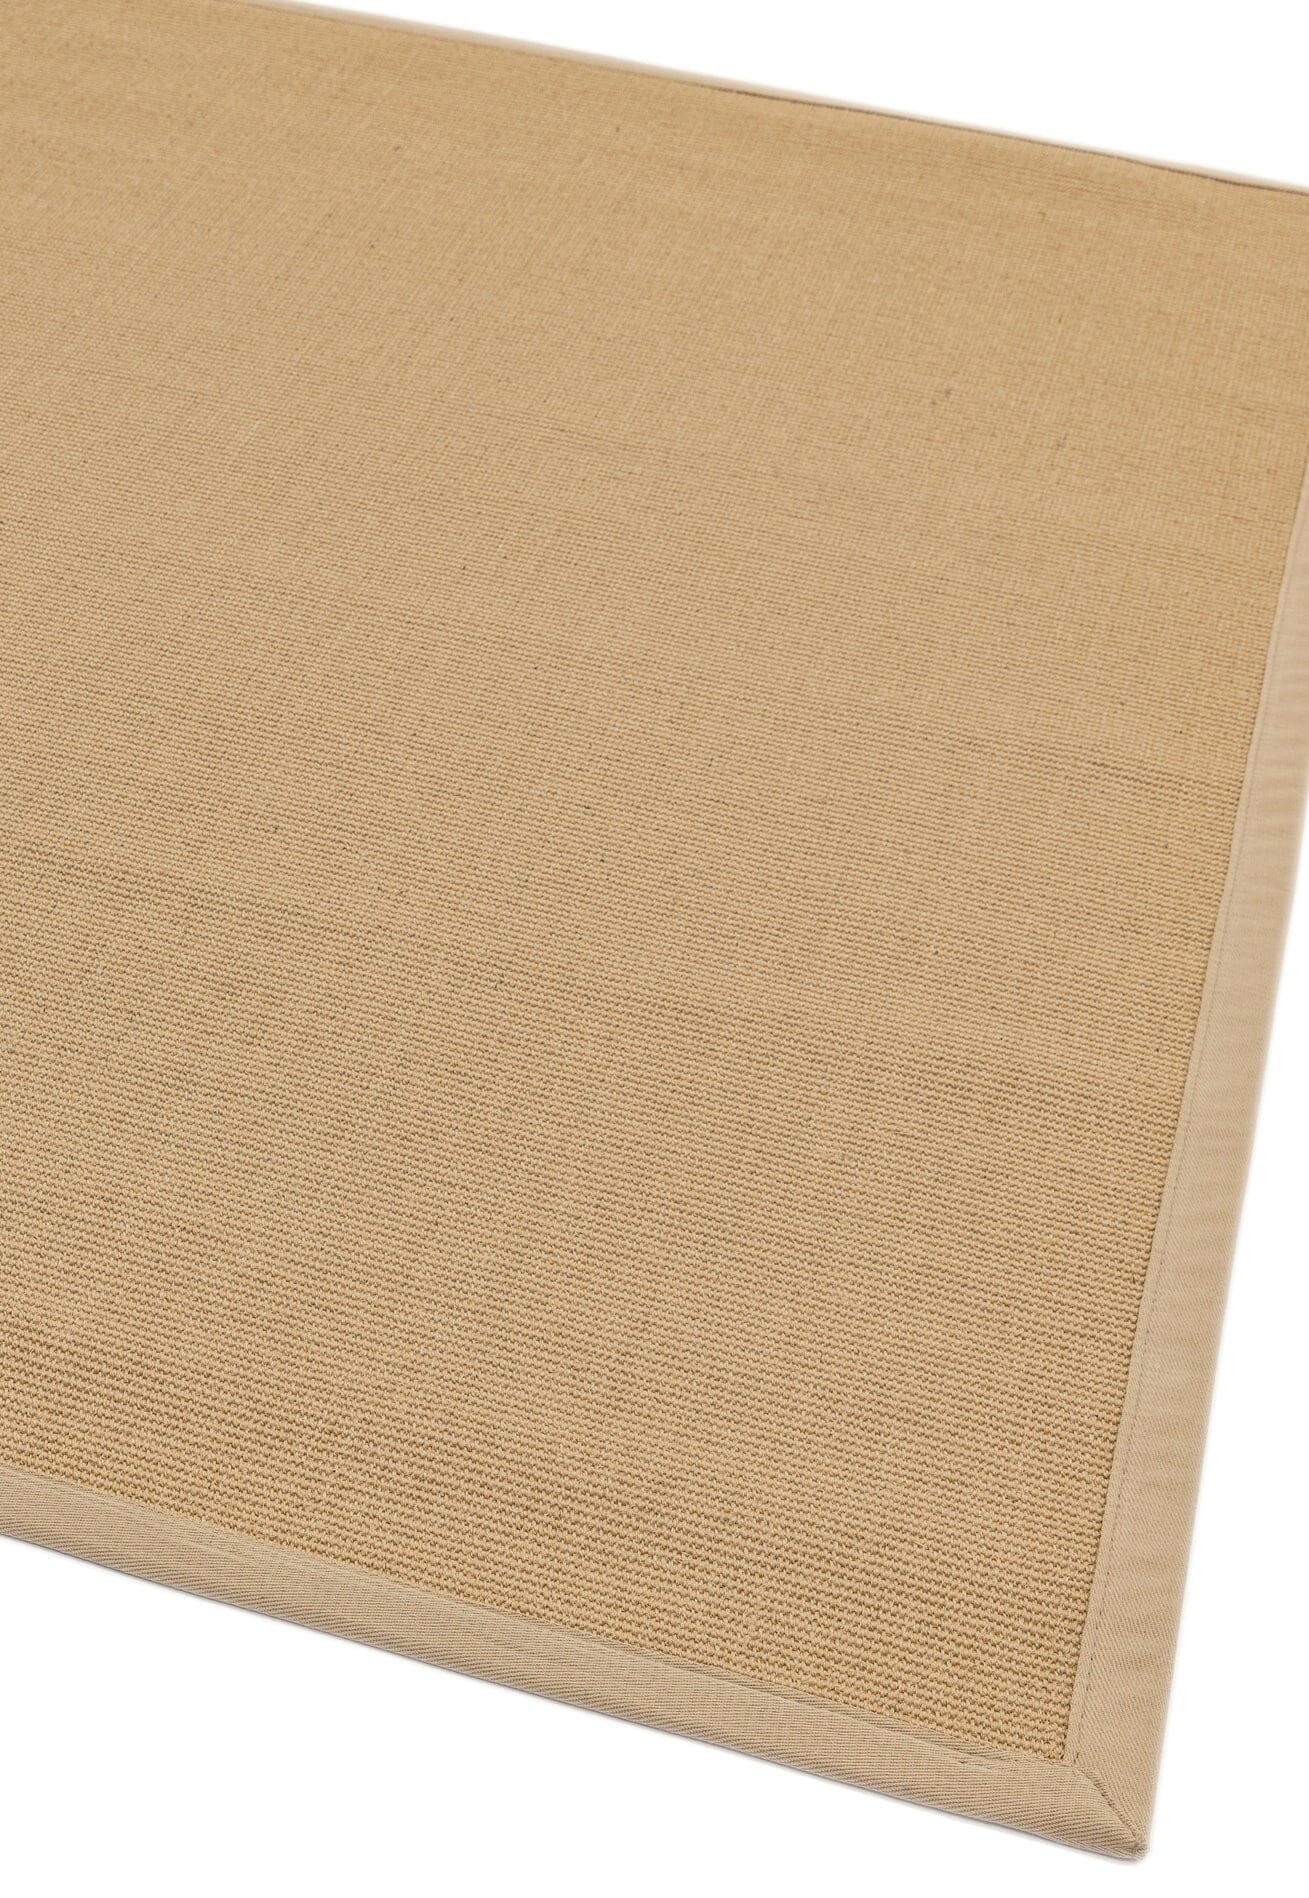 Asiatic Carpets Sisal Machine Woven Rug Linen/Linen - 68 x 240cm